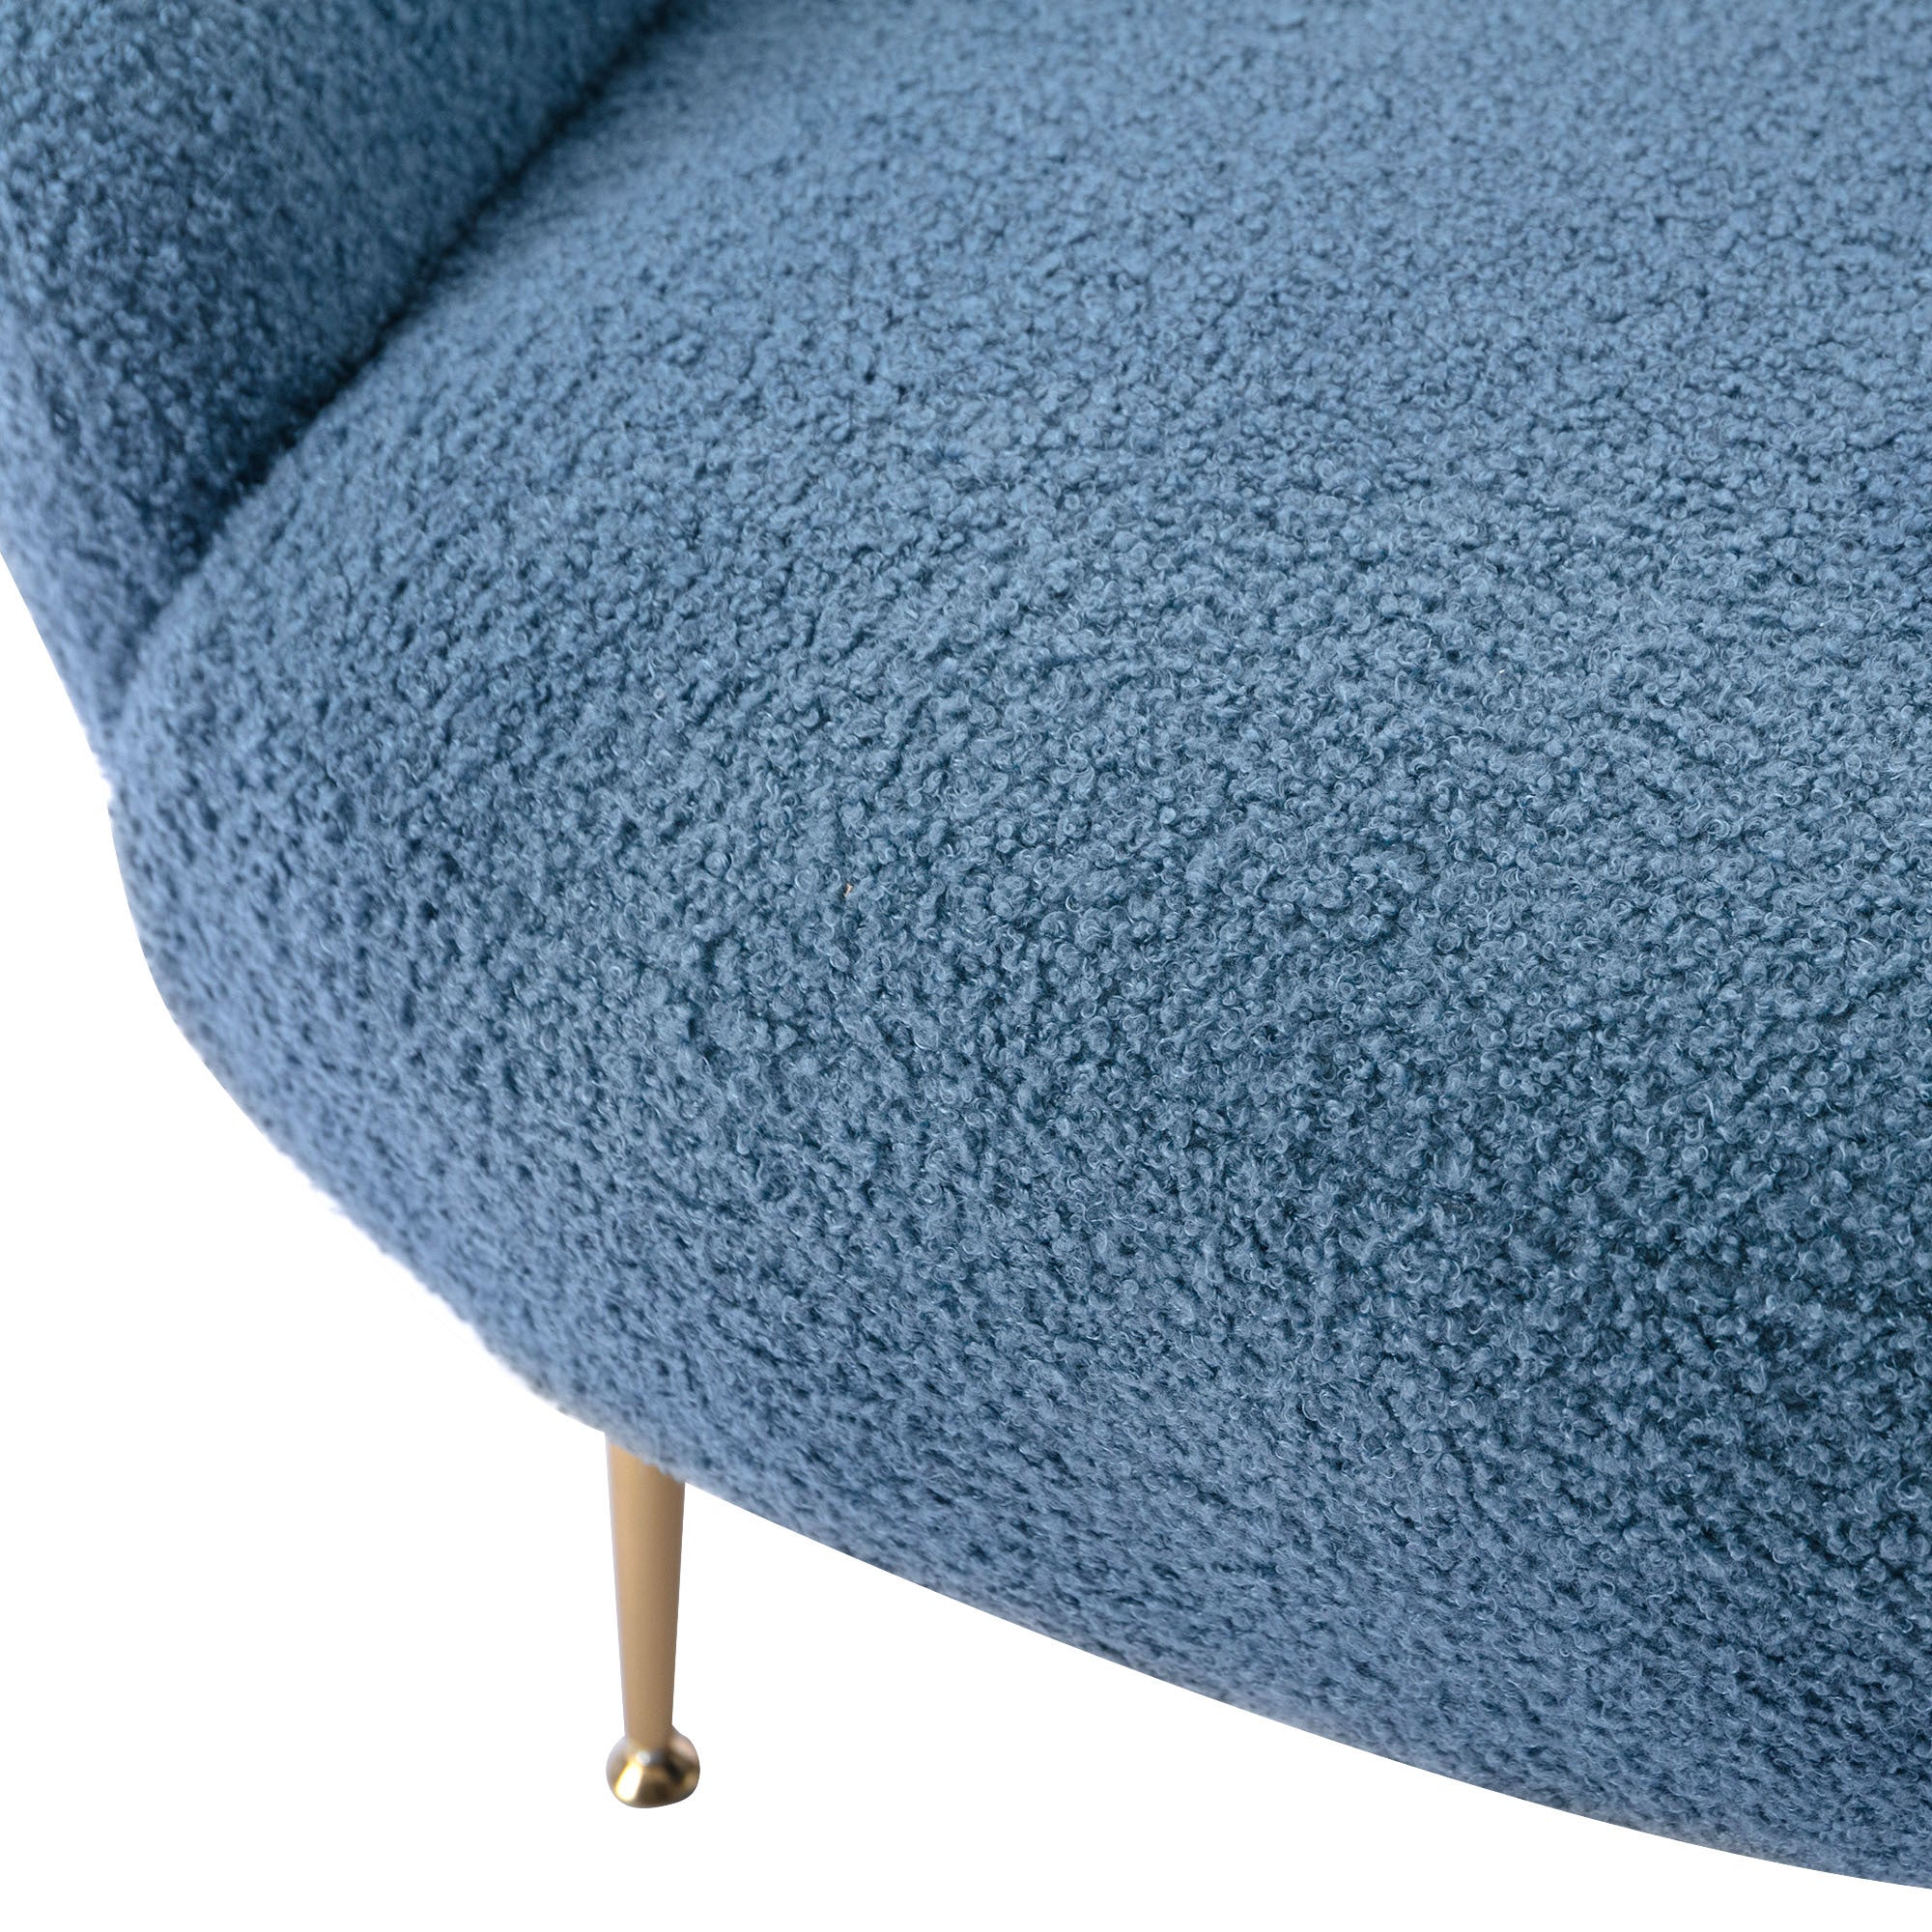 Orisfur. Modern Comfy Leisure Accent Chair, Teddy dark blue-foam-altay velvet